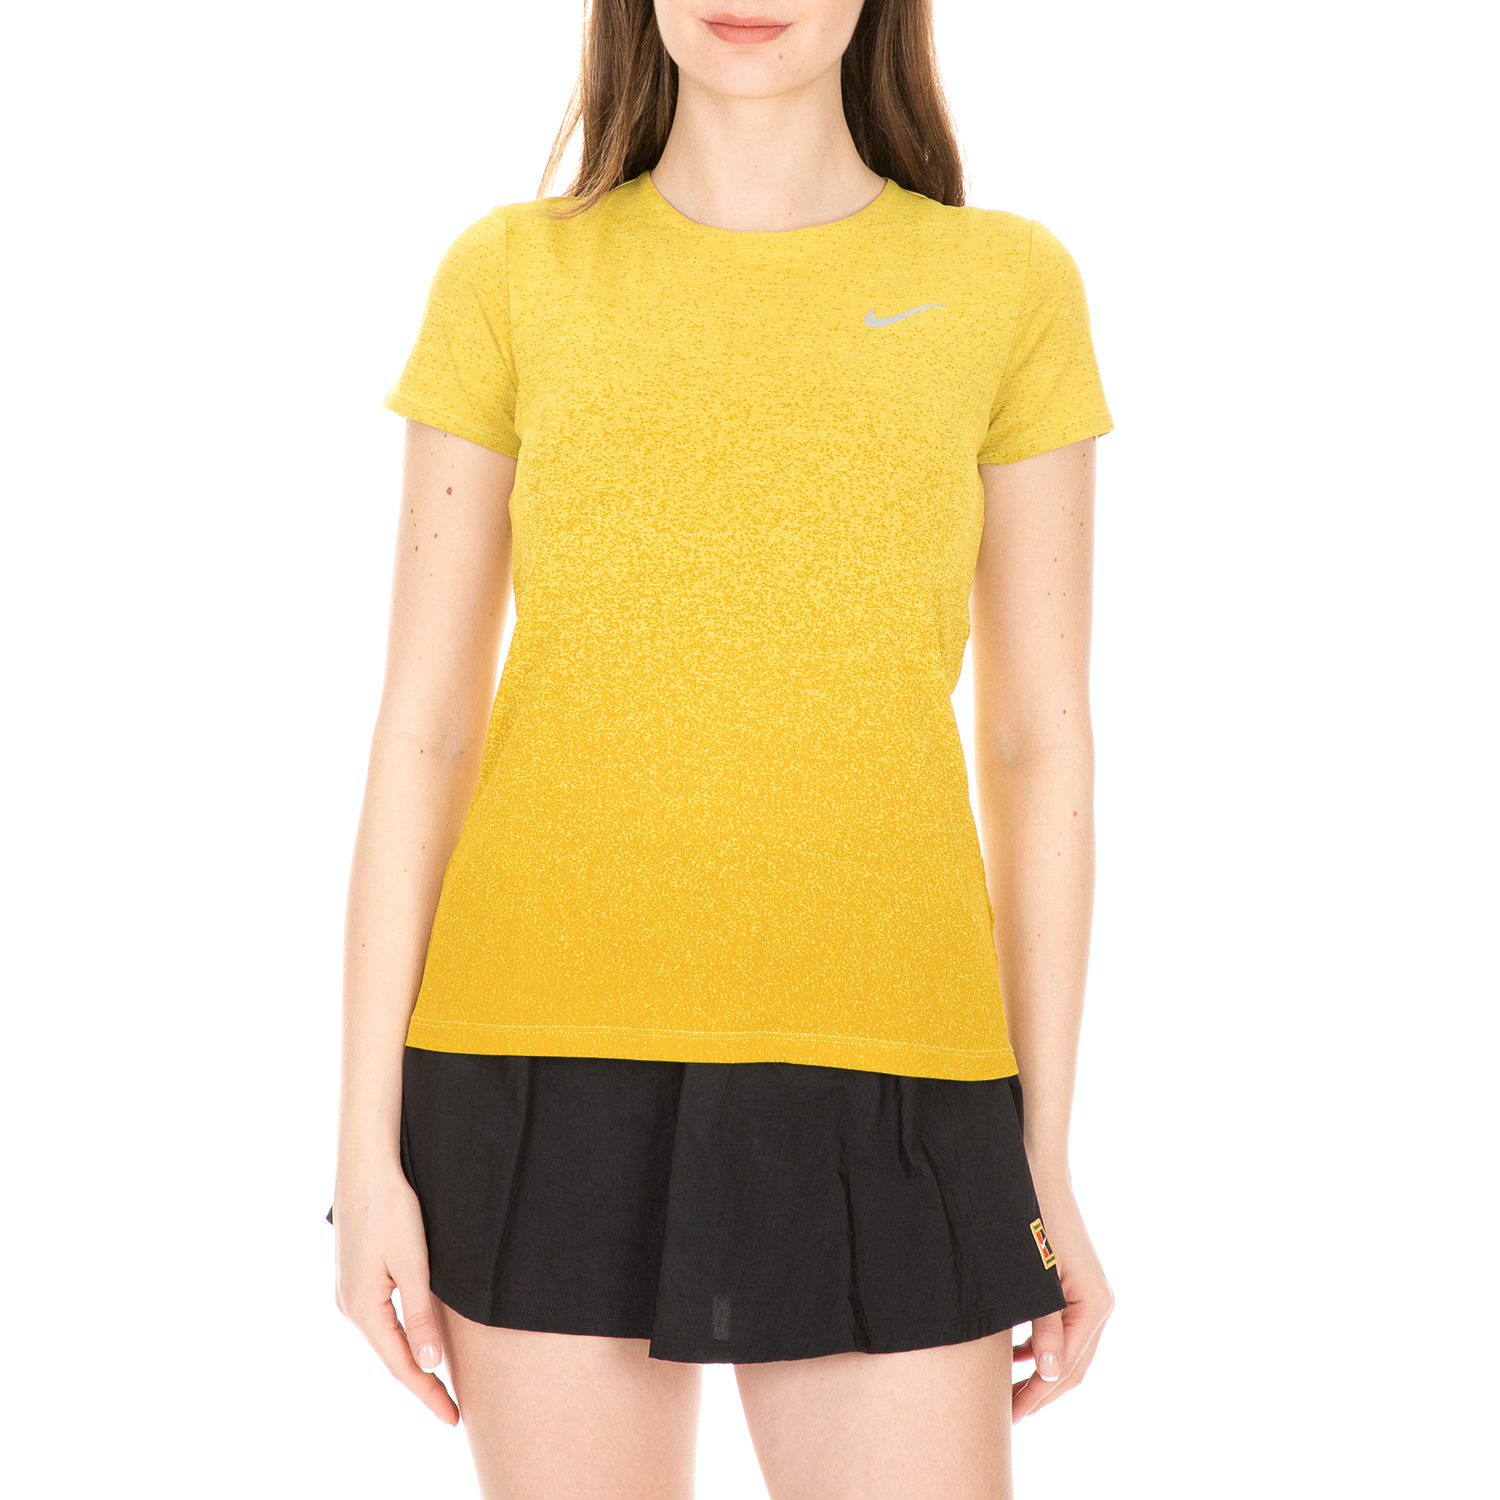 NIKE - Γυναικείο t-shirt NIKE MEDALIST TOP κίτρινο Γυναικεία/Ρούχα/Αθλητικά/T-shirt-Τοπ